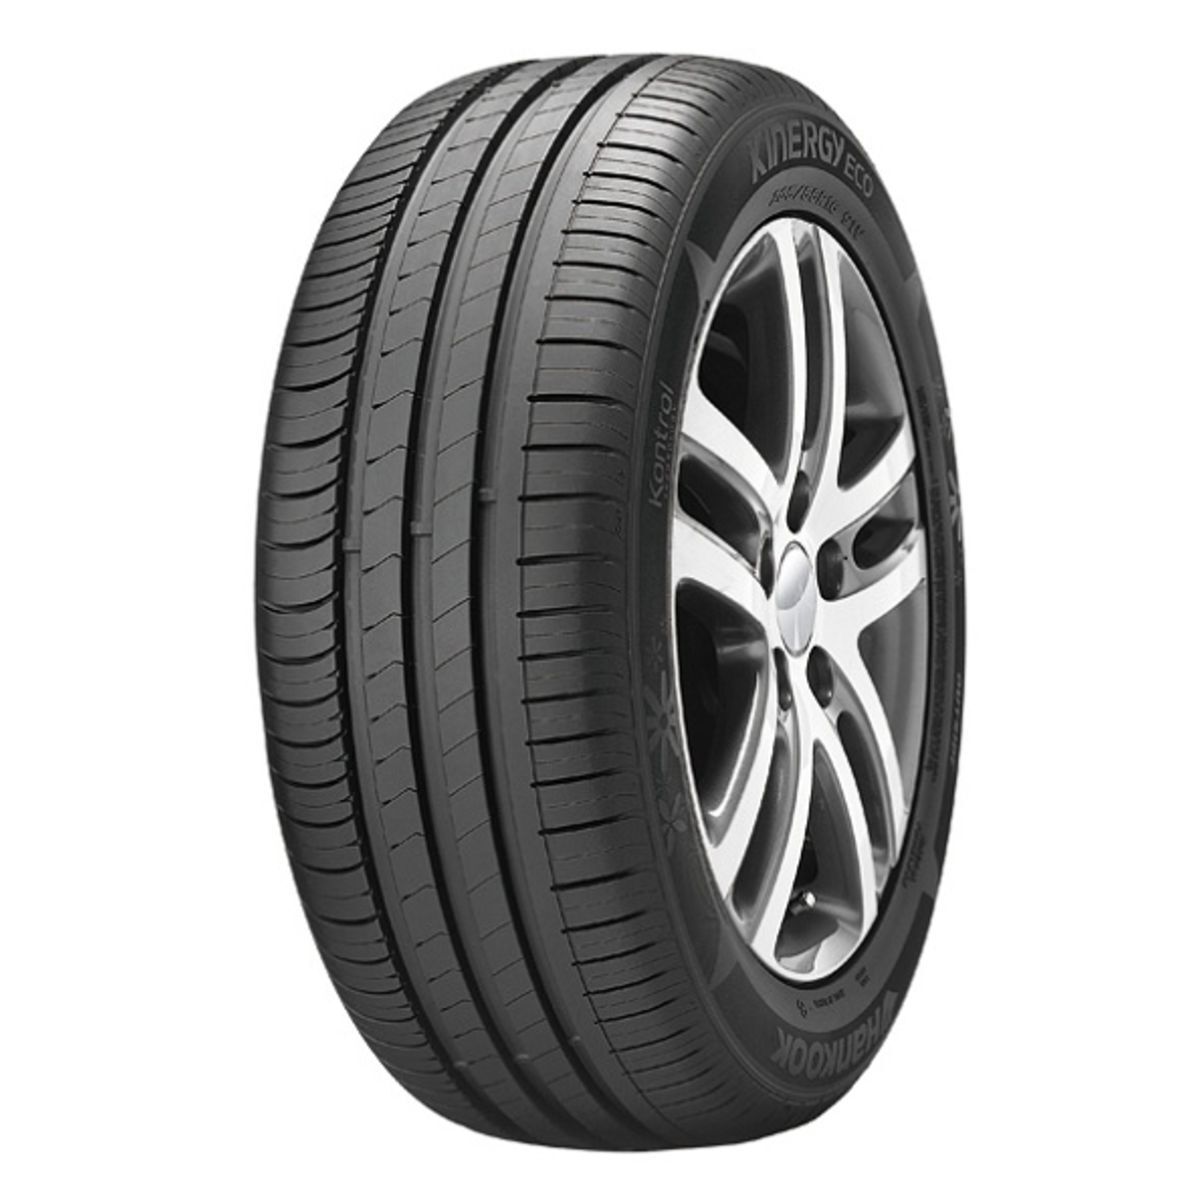 Neumáticos de verano HANKOOK Kinergy Eco K425 195/65R15 XL 95H